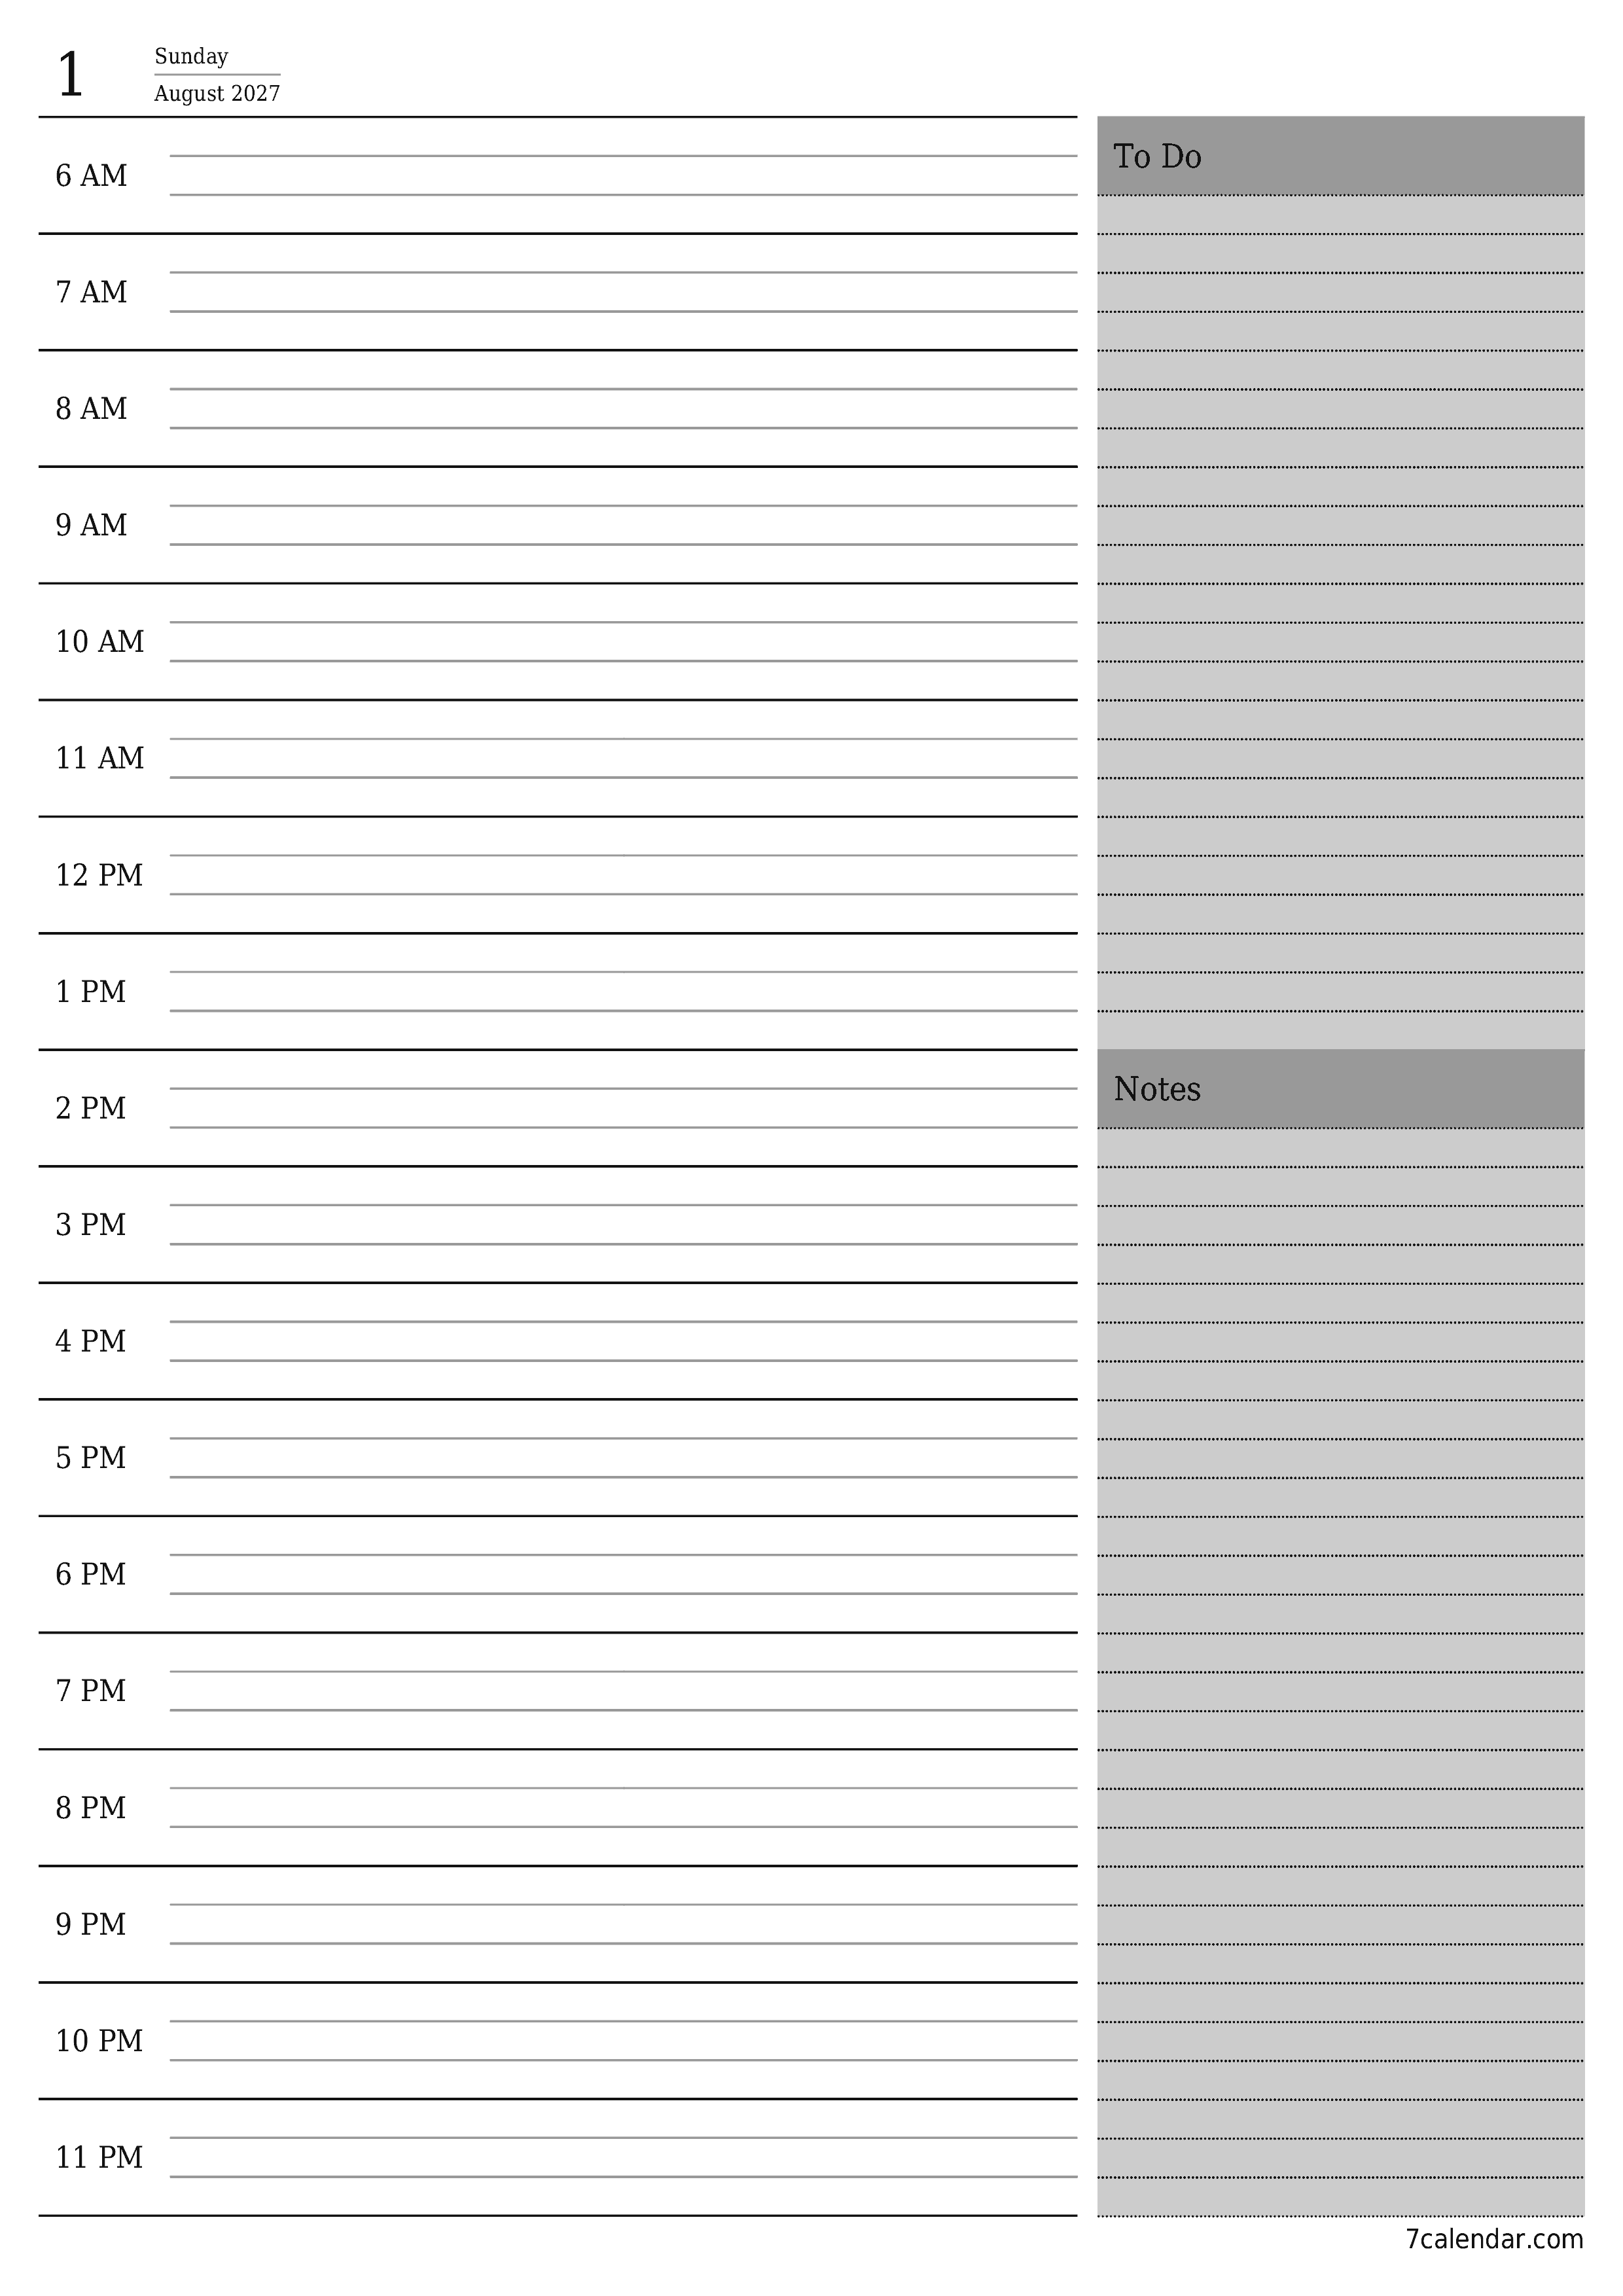 Blank calendar August 2027